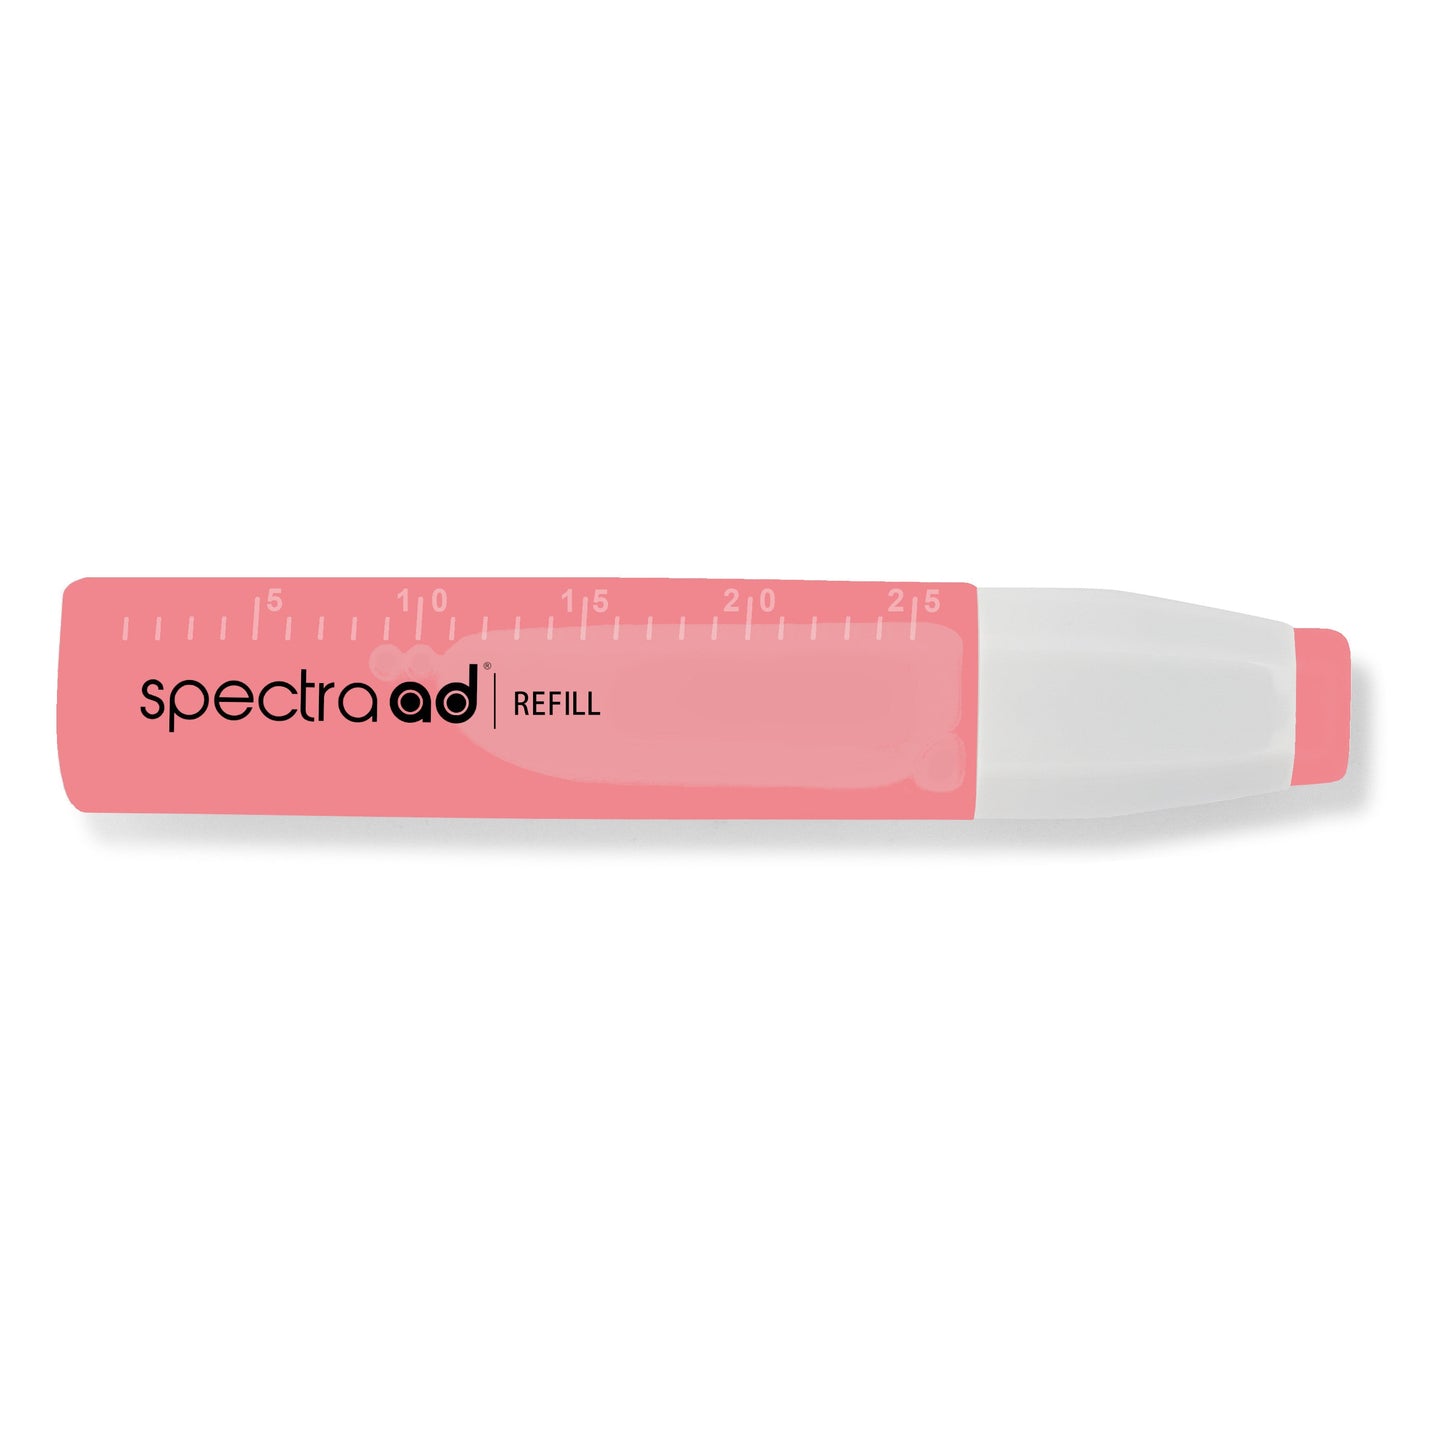 064 - Peach - Spectra AD Refill Bottle